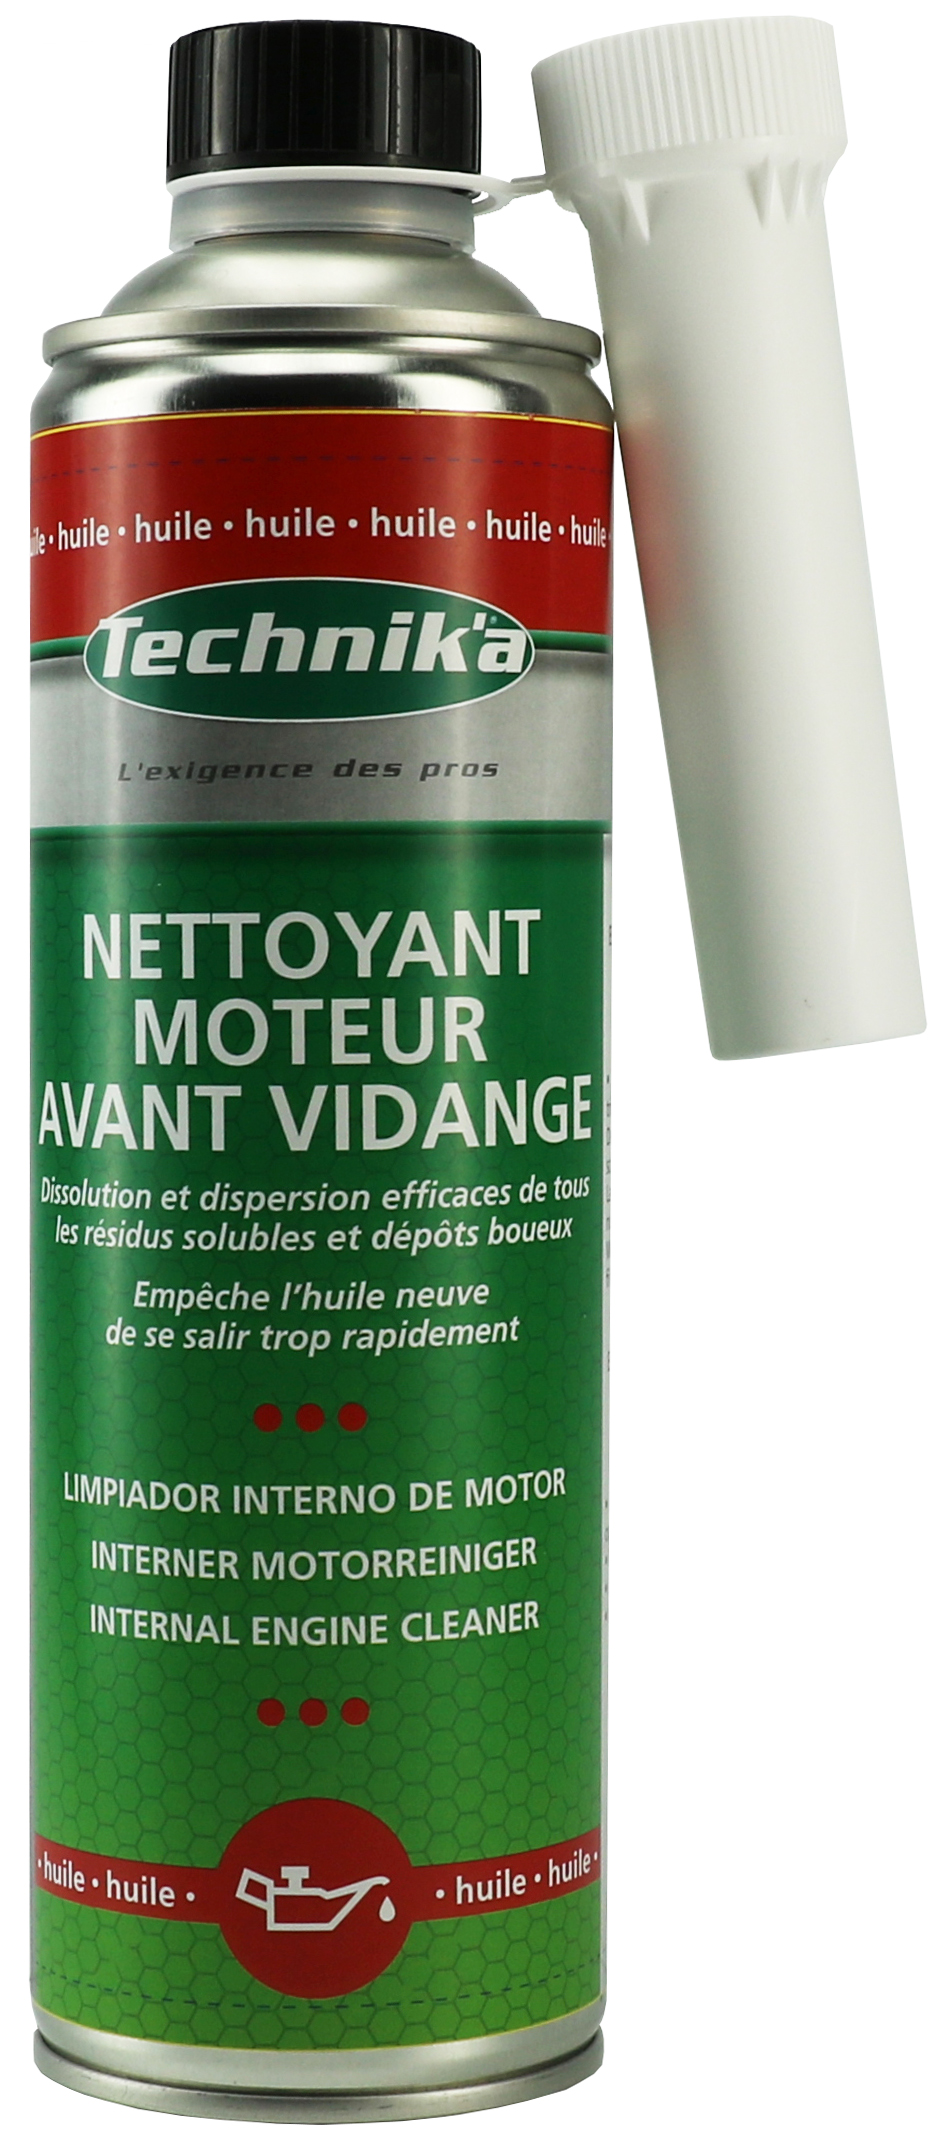 Additifs huile - Nettoyant moteur avant vidange Technik'a 860106 – Technika